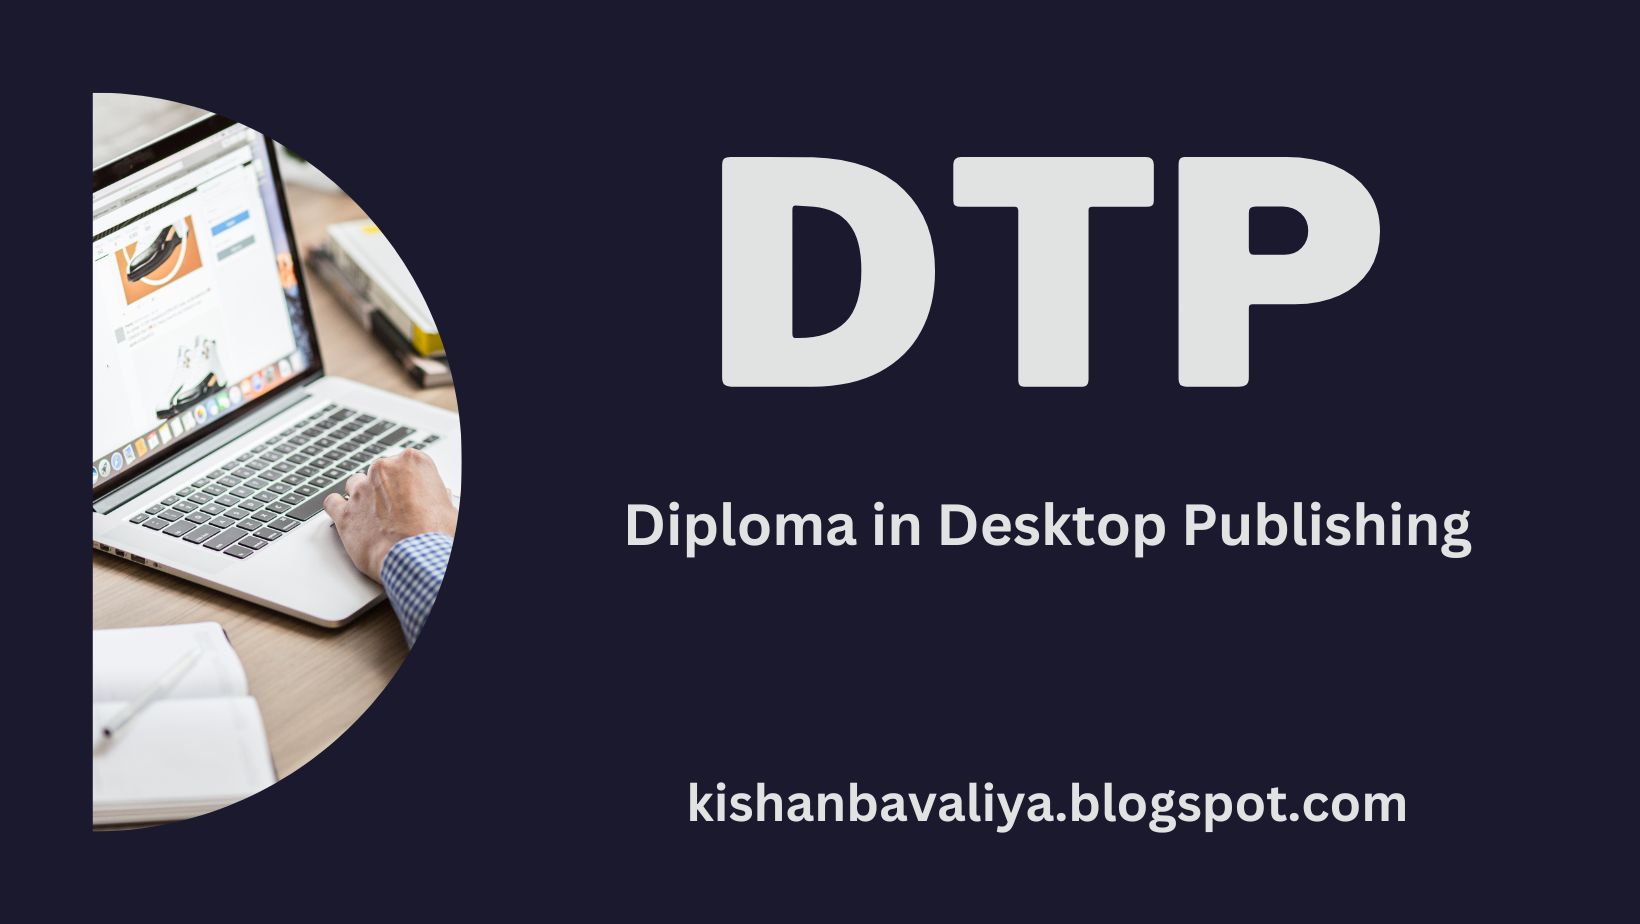 DTP - Diploma in Desktop Publishing